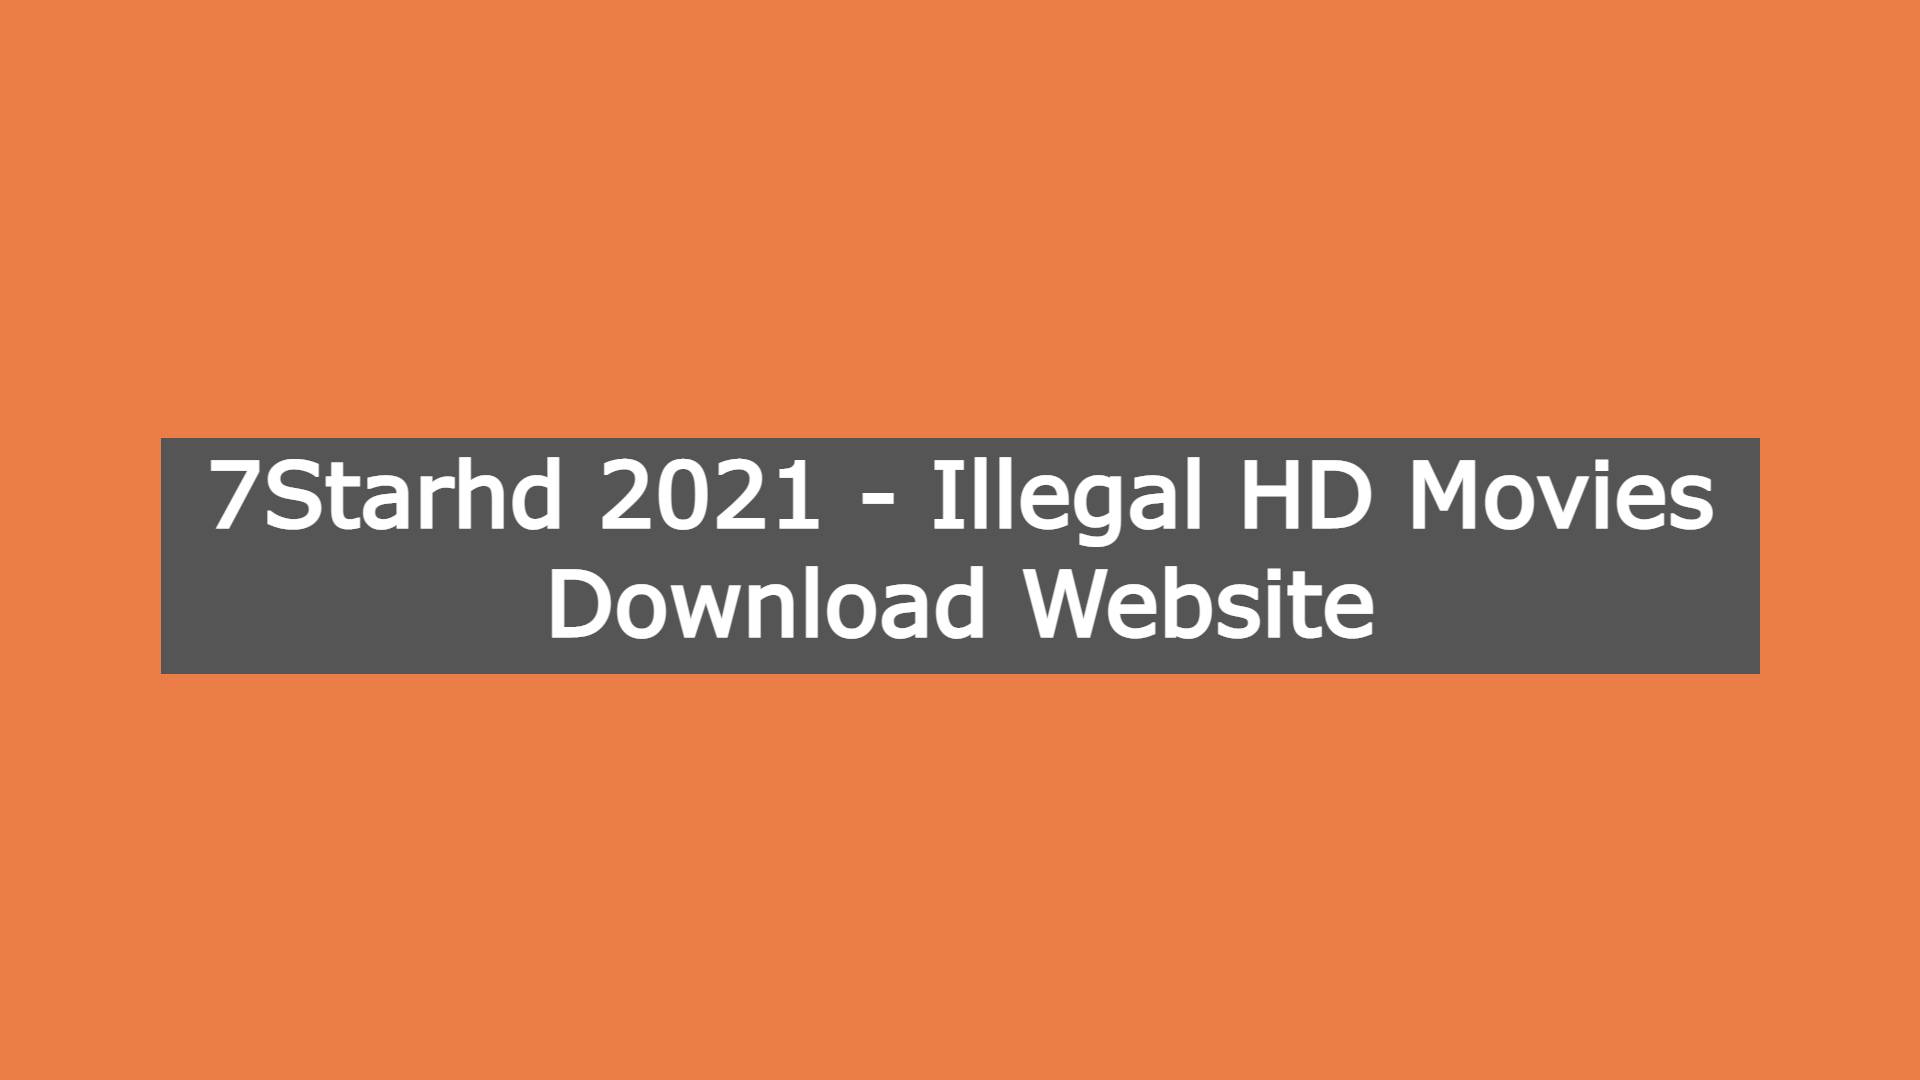 7Starhd 2021 - Illegal HD Movies Download Website